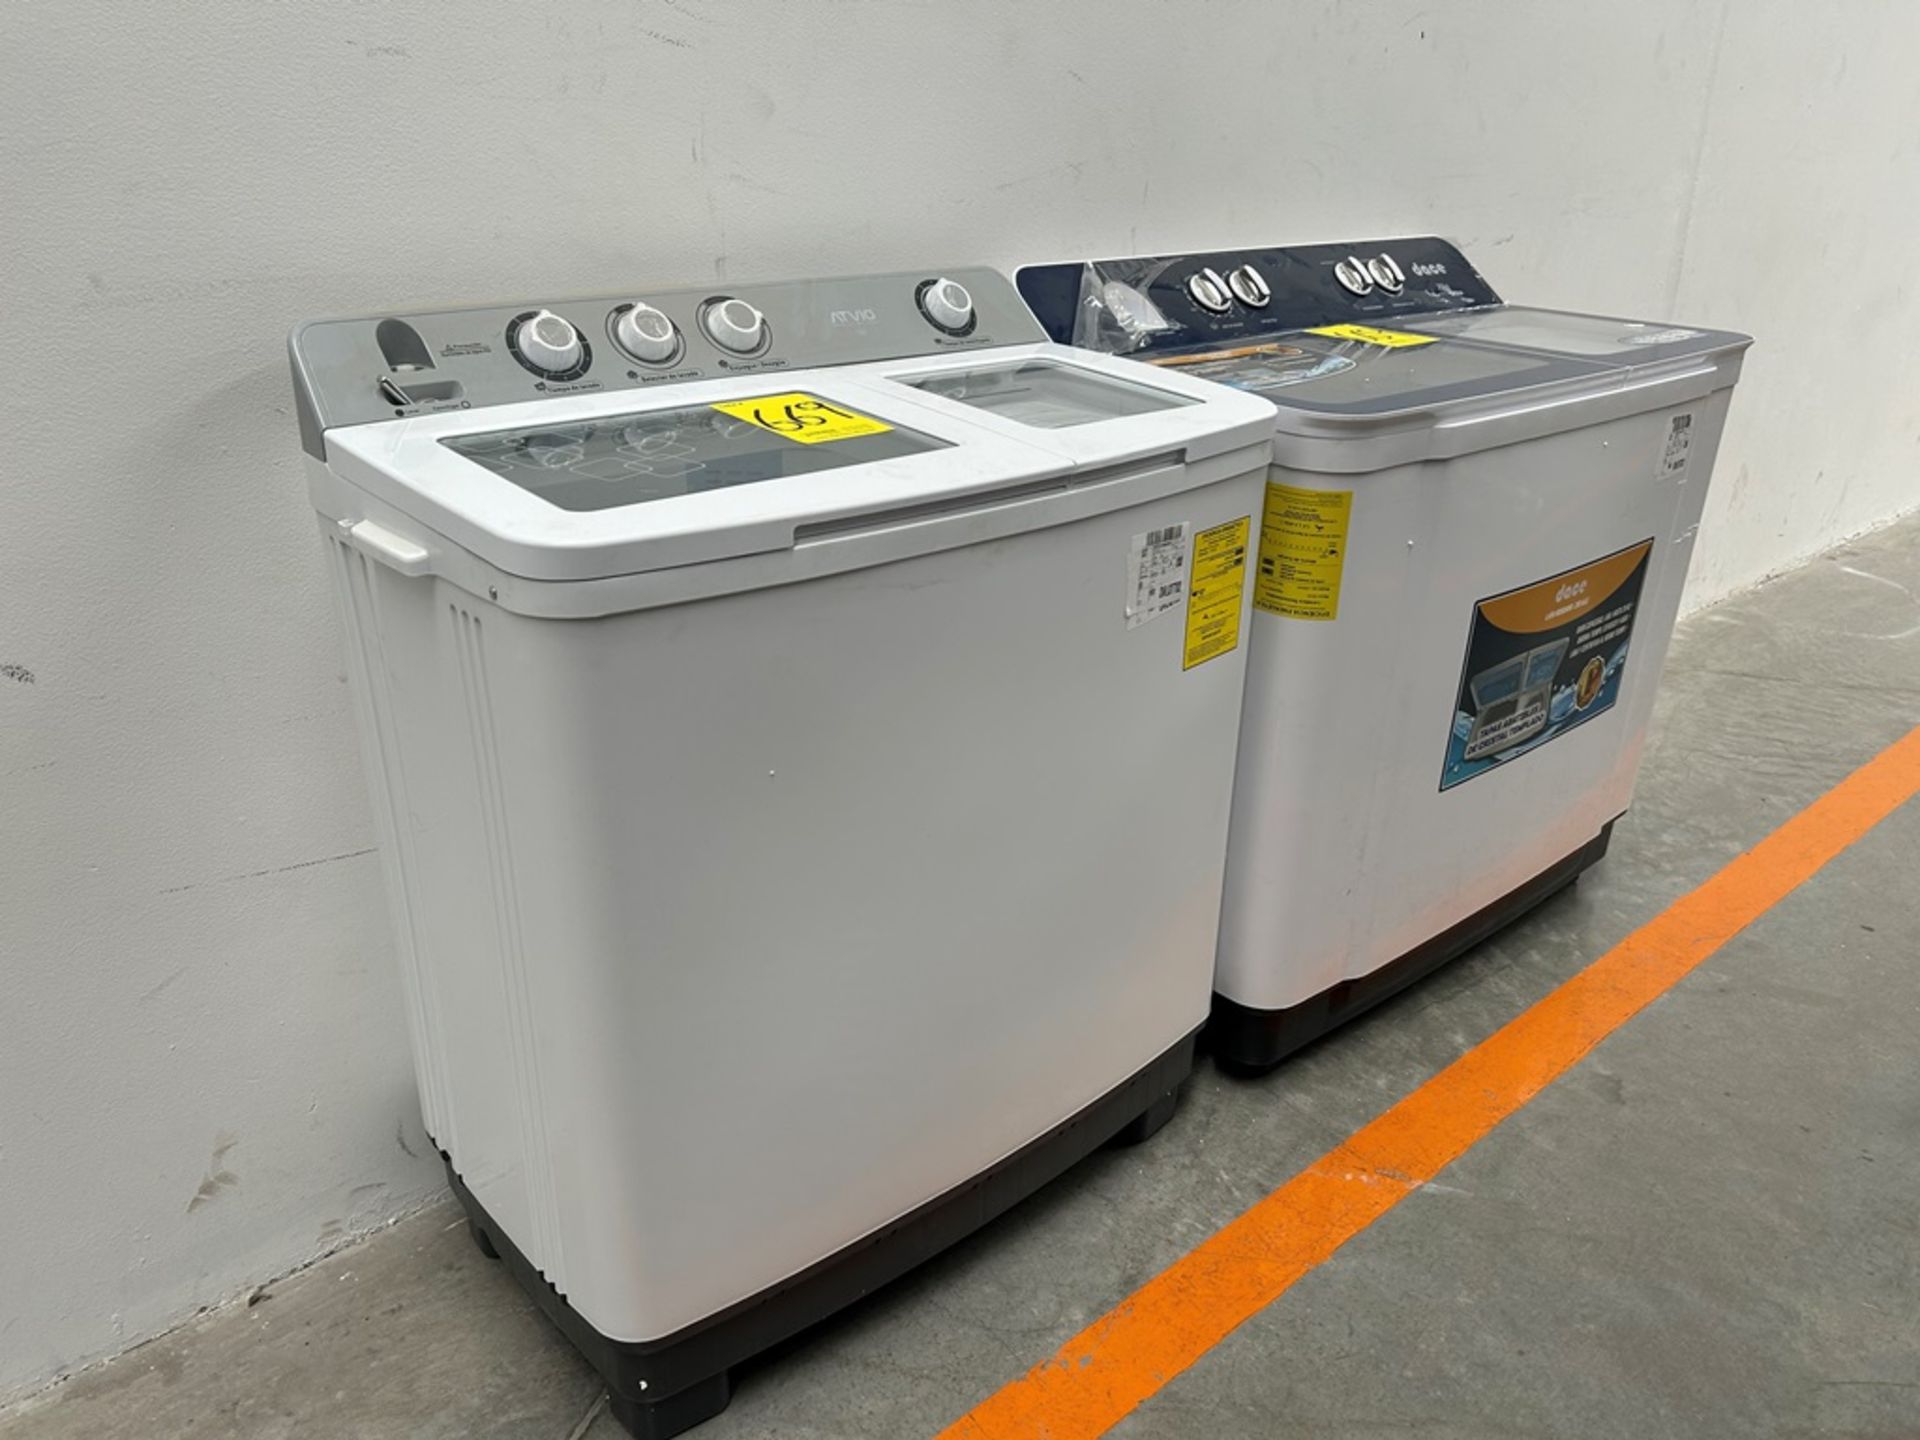 Lote de 2 lavadoras contiene: 1 Lavadora de 20 KG, Marca DACE, Modelo LS2002C, Serie 9669, Color BL - Image 3 of 8